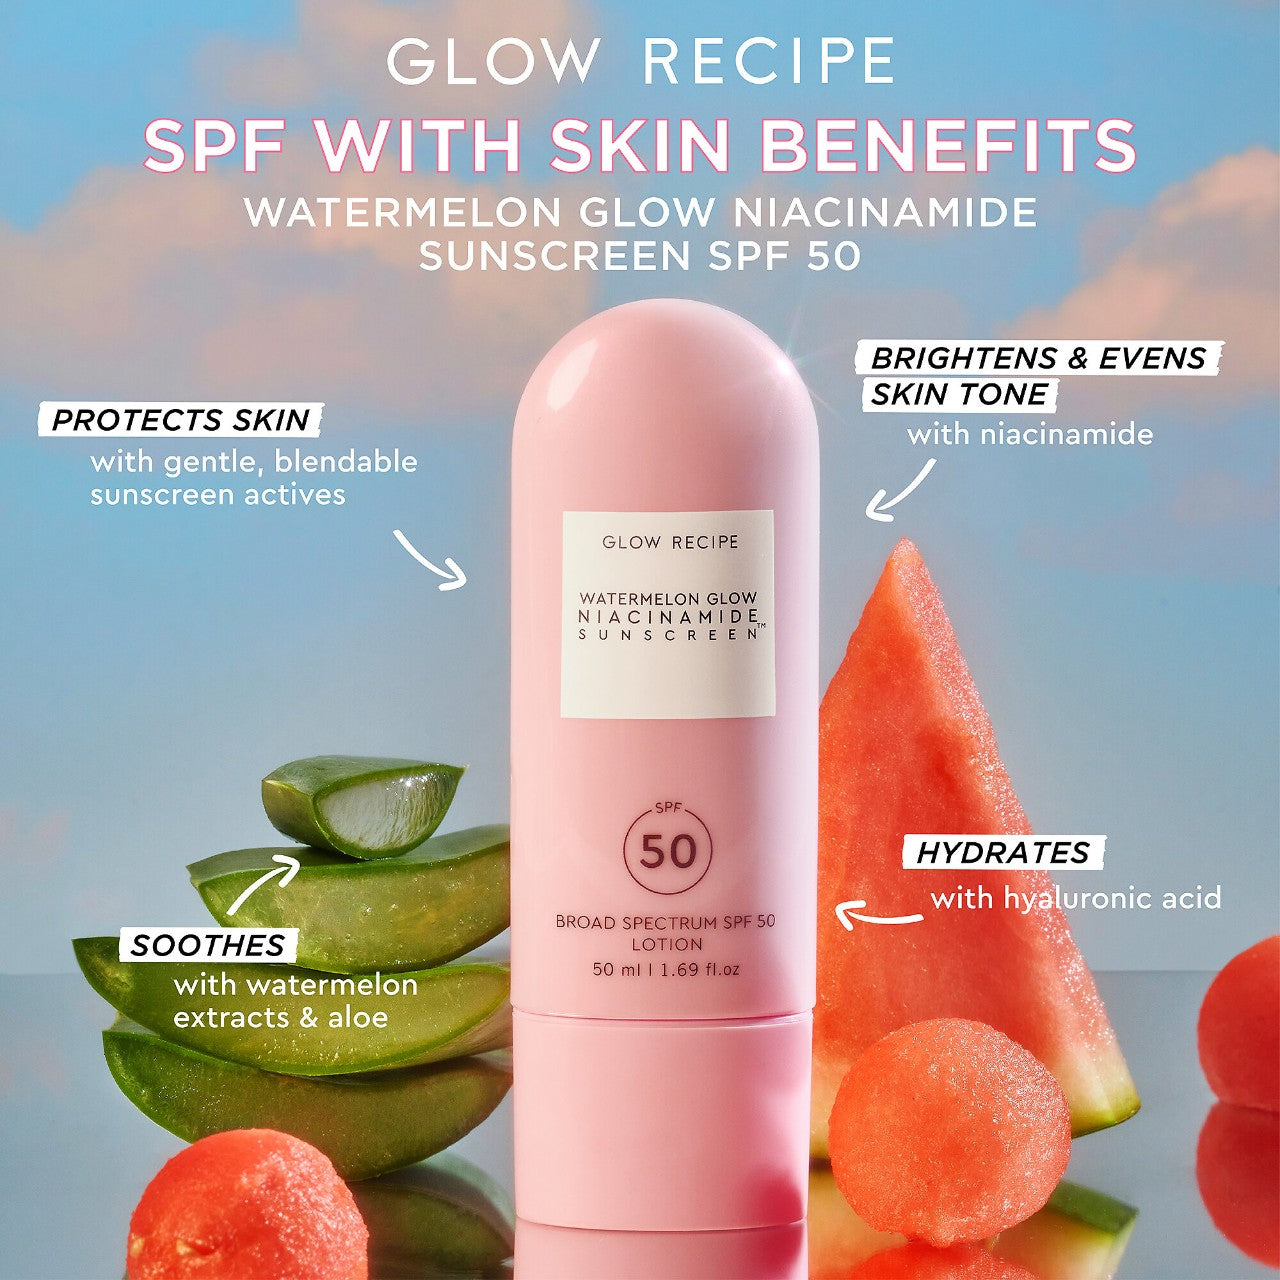 GLOW RECIPE - Watermelon Glow Niacinamide Sunscreen SPF 50